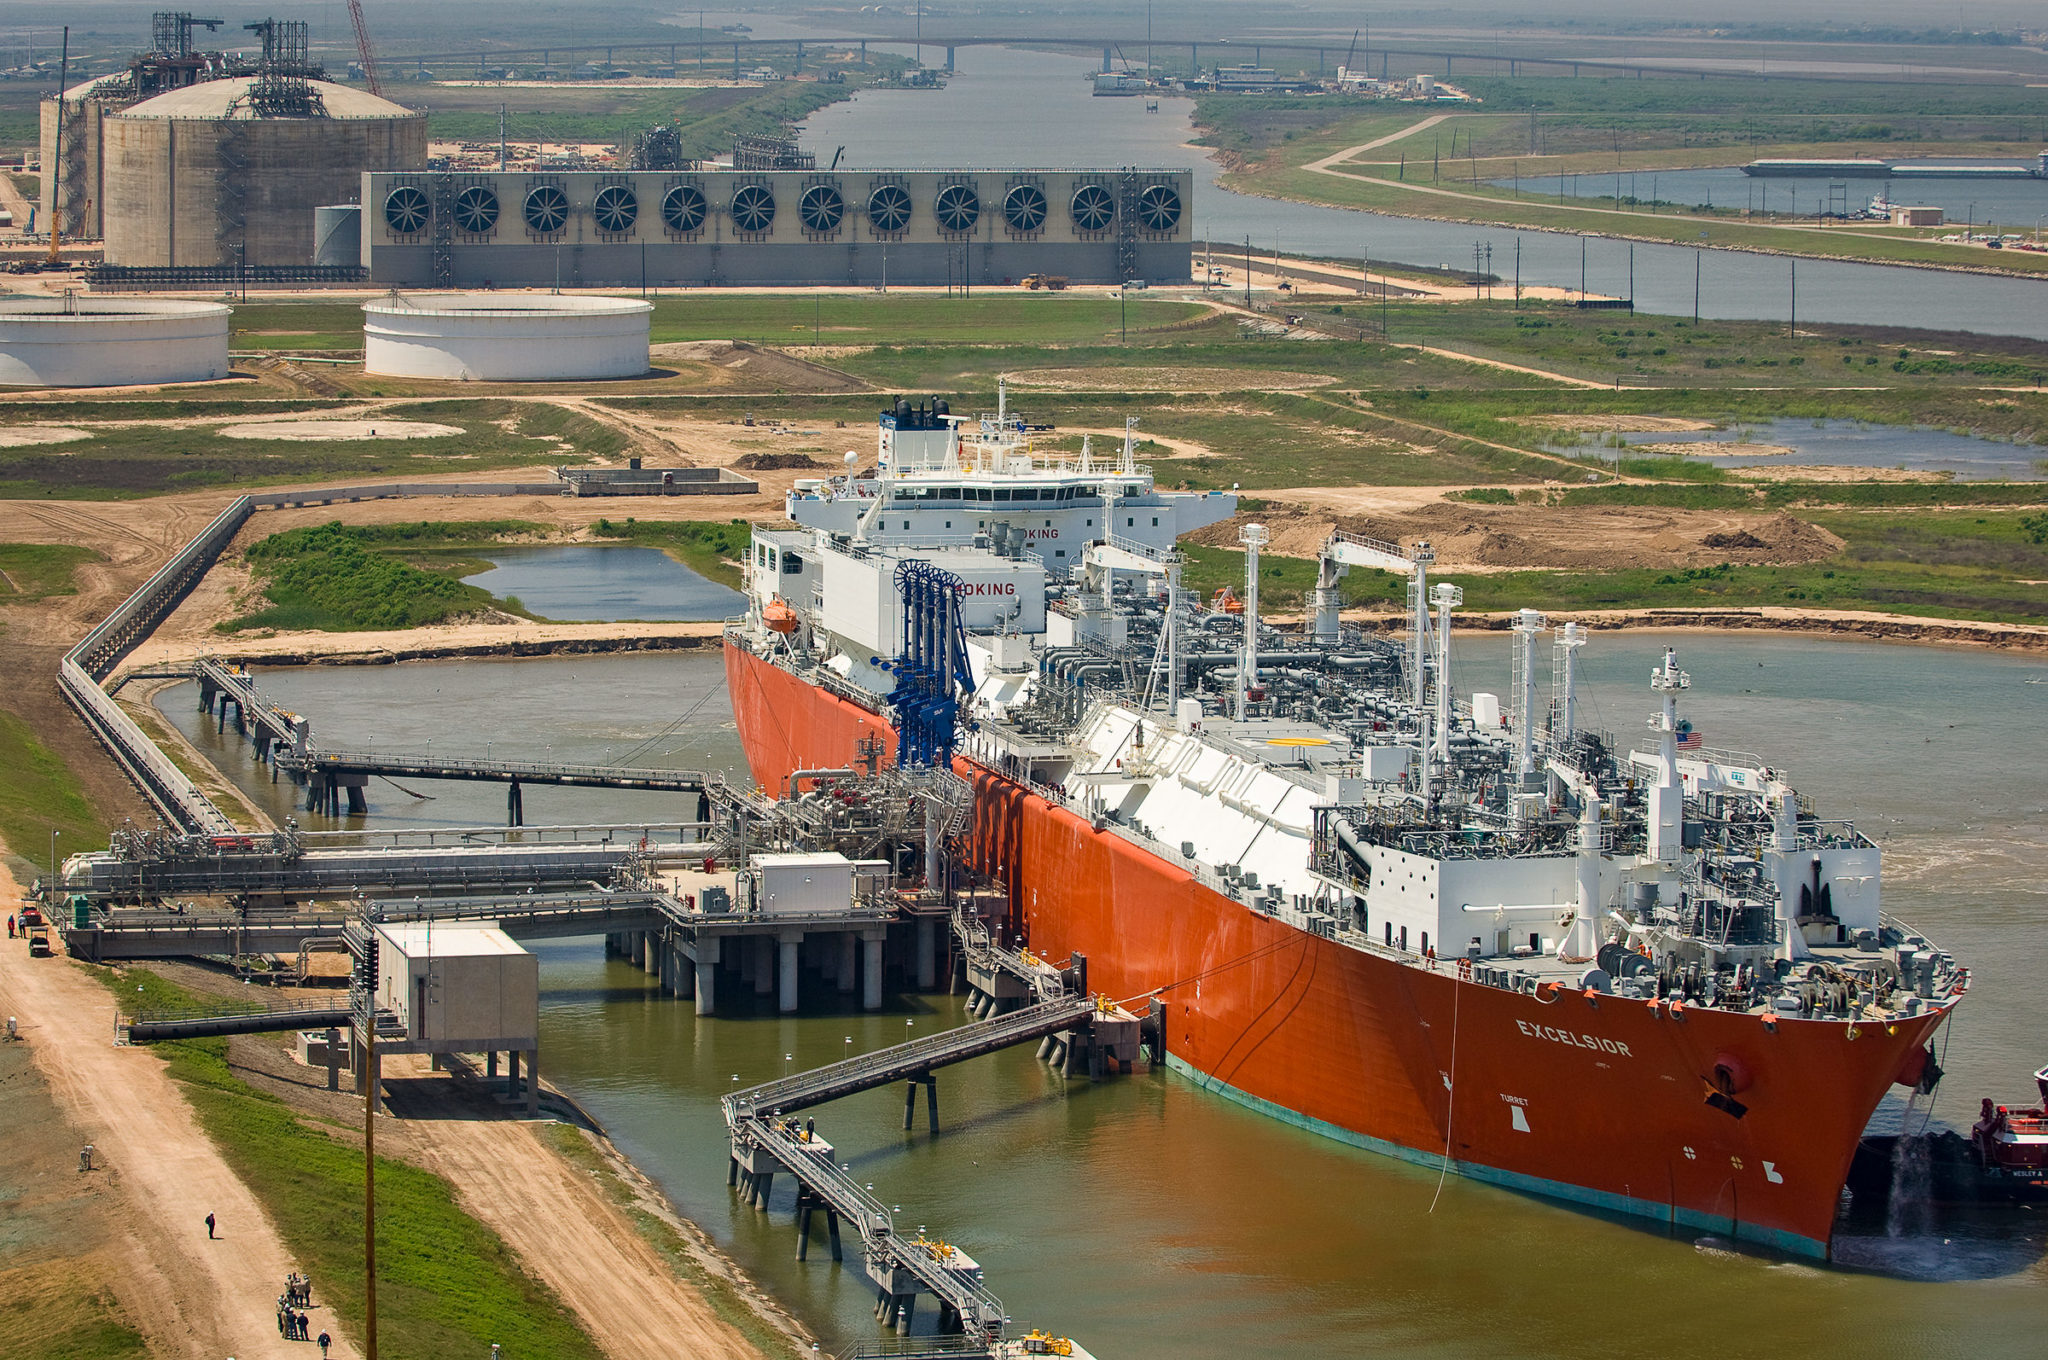 The MV Excelsior docked at Freeport LNG Ship Terminal Texas - Image via LNG Development, L.P.